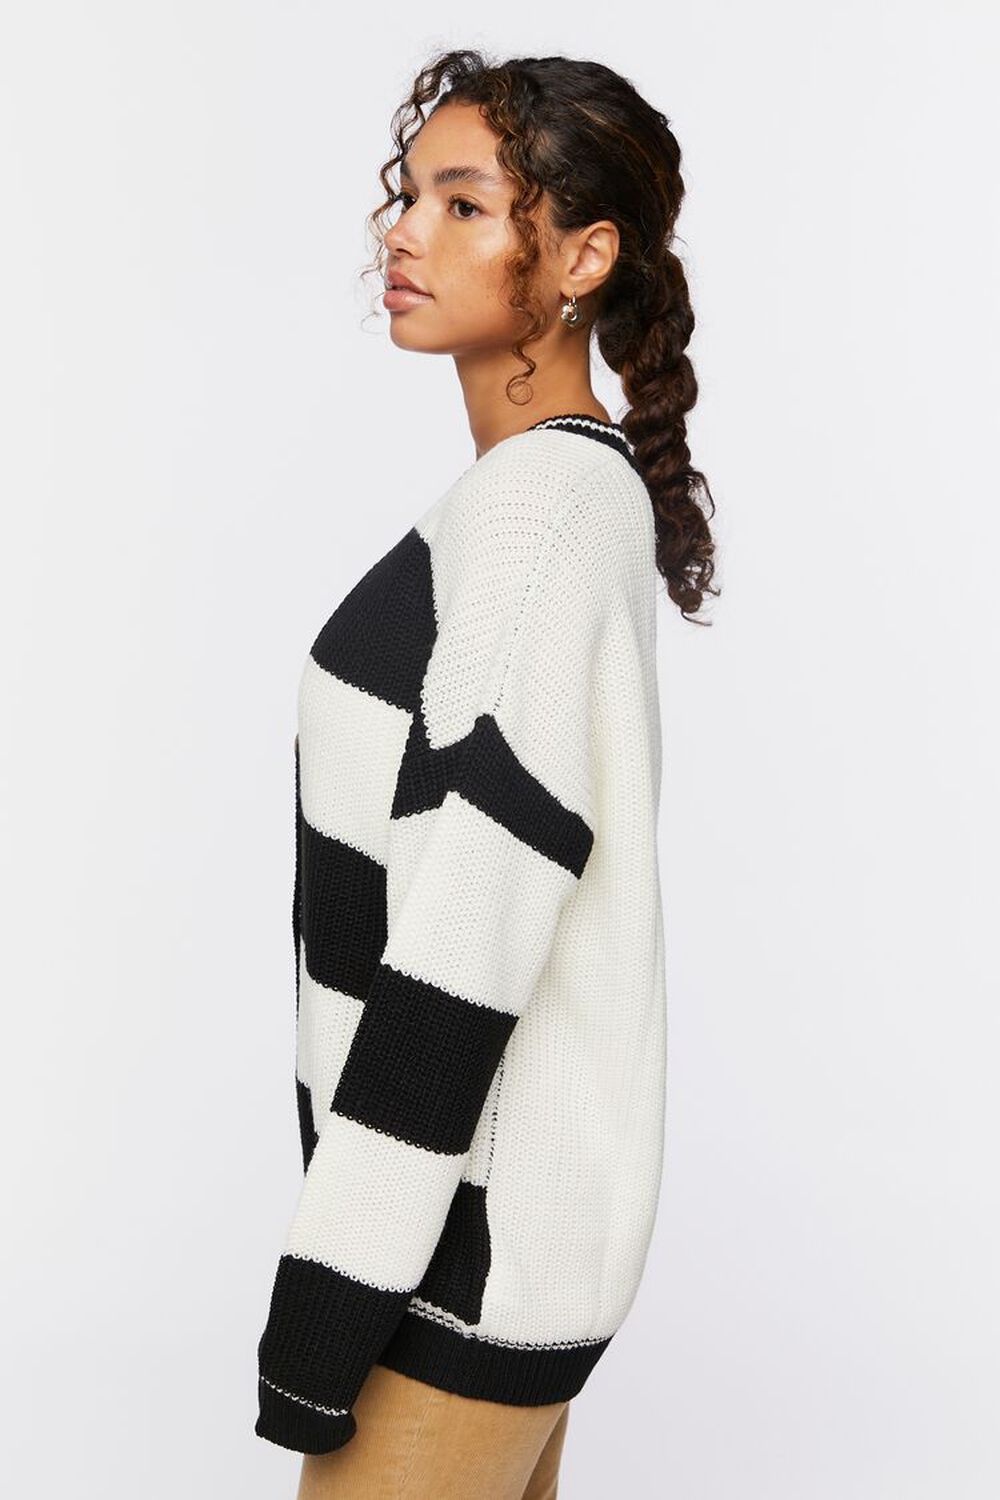 BLACK/WHITE Yin Yang Colorblock Cardigan Sweater, image 2